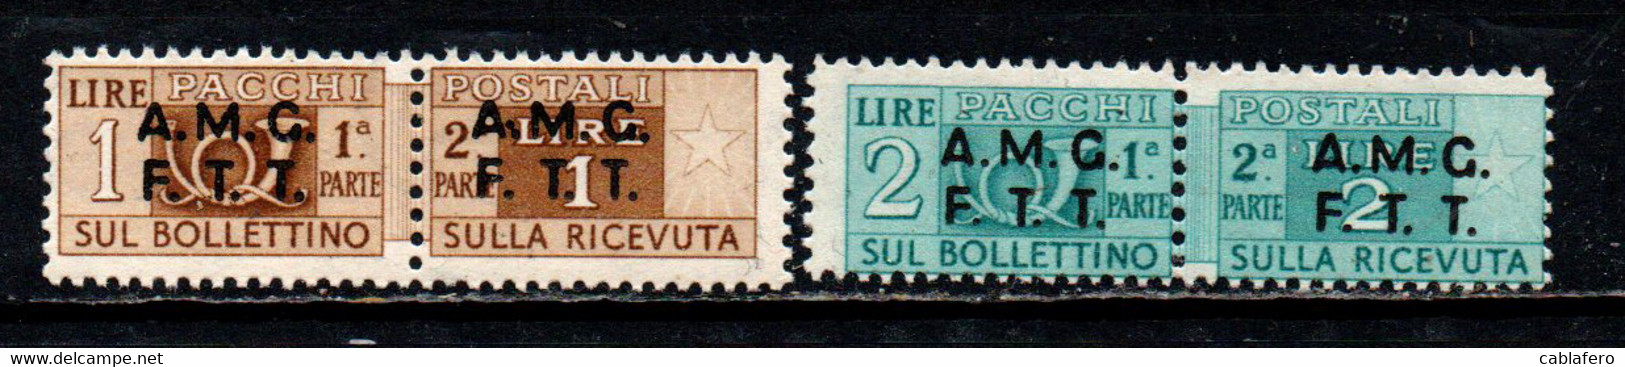 TRIESTE - AMGFTT - 1947 - PACCHI POSTALI - SOVRASTAMPA SU DUE LINEE - 1 E 2 LIRE - MNH - Paketmarken/Konzessionen